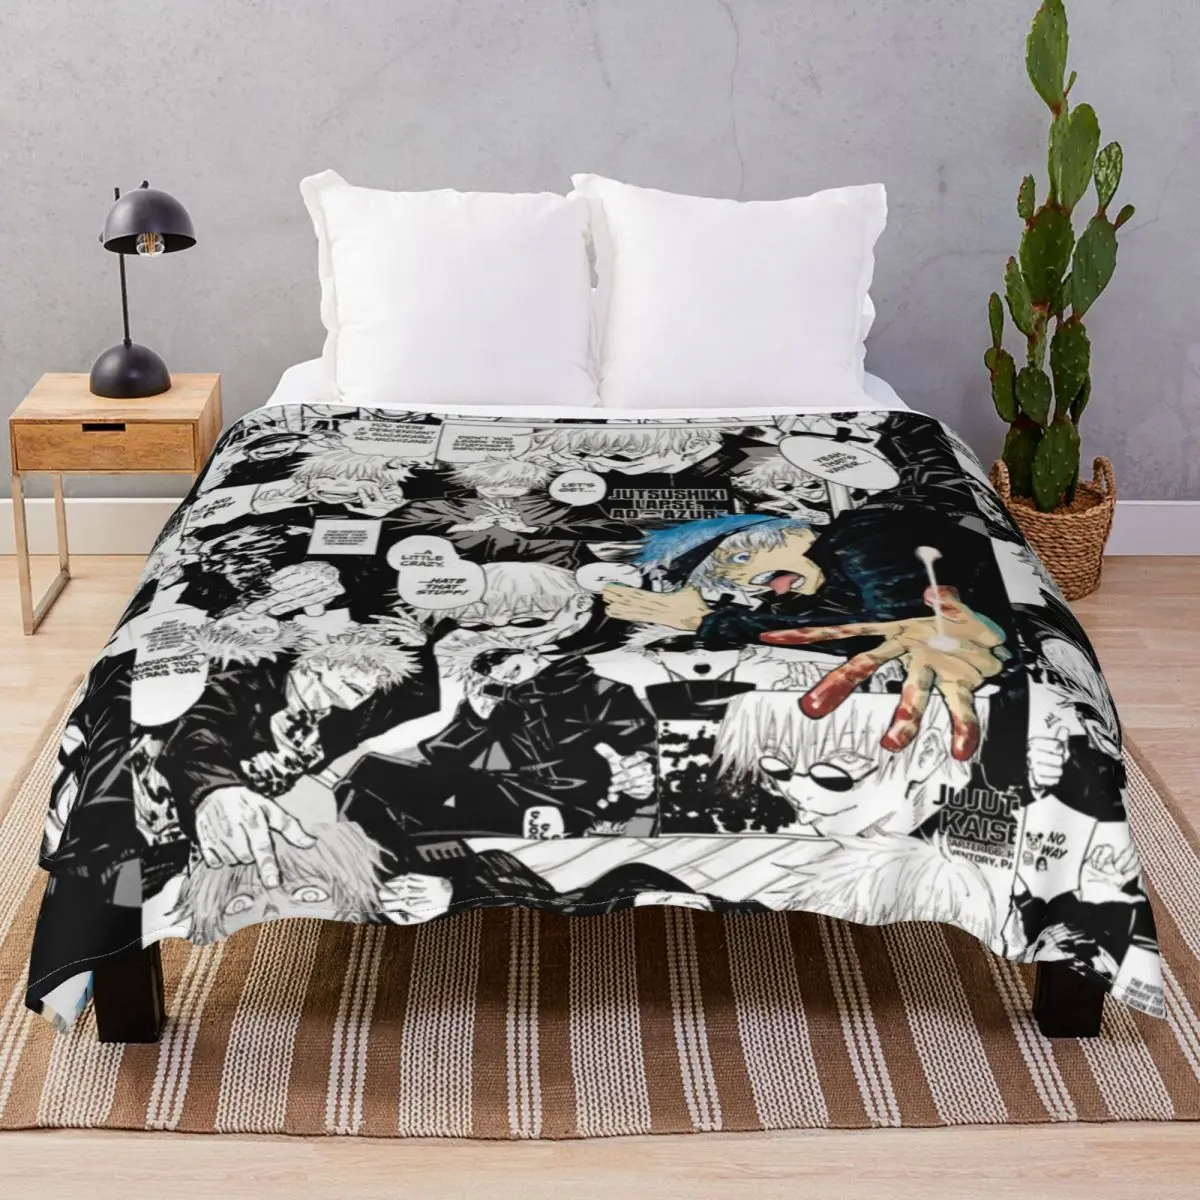 Gojo Satoru Collage Blankets Fleece Decoration Fluffy Throw Blanket for Bedding Home Couch Travel Cinema